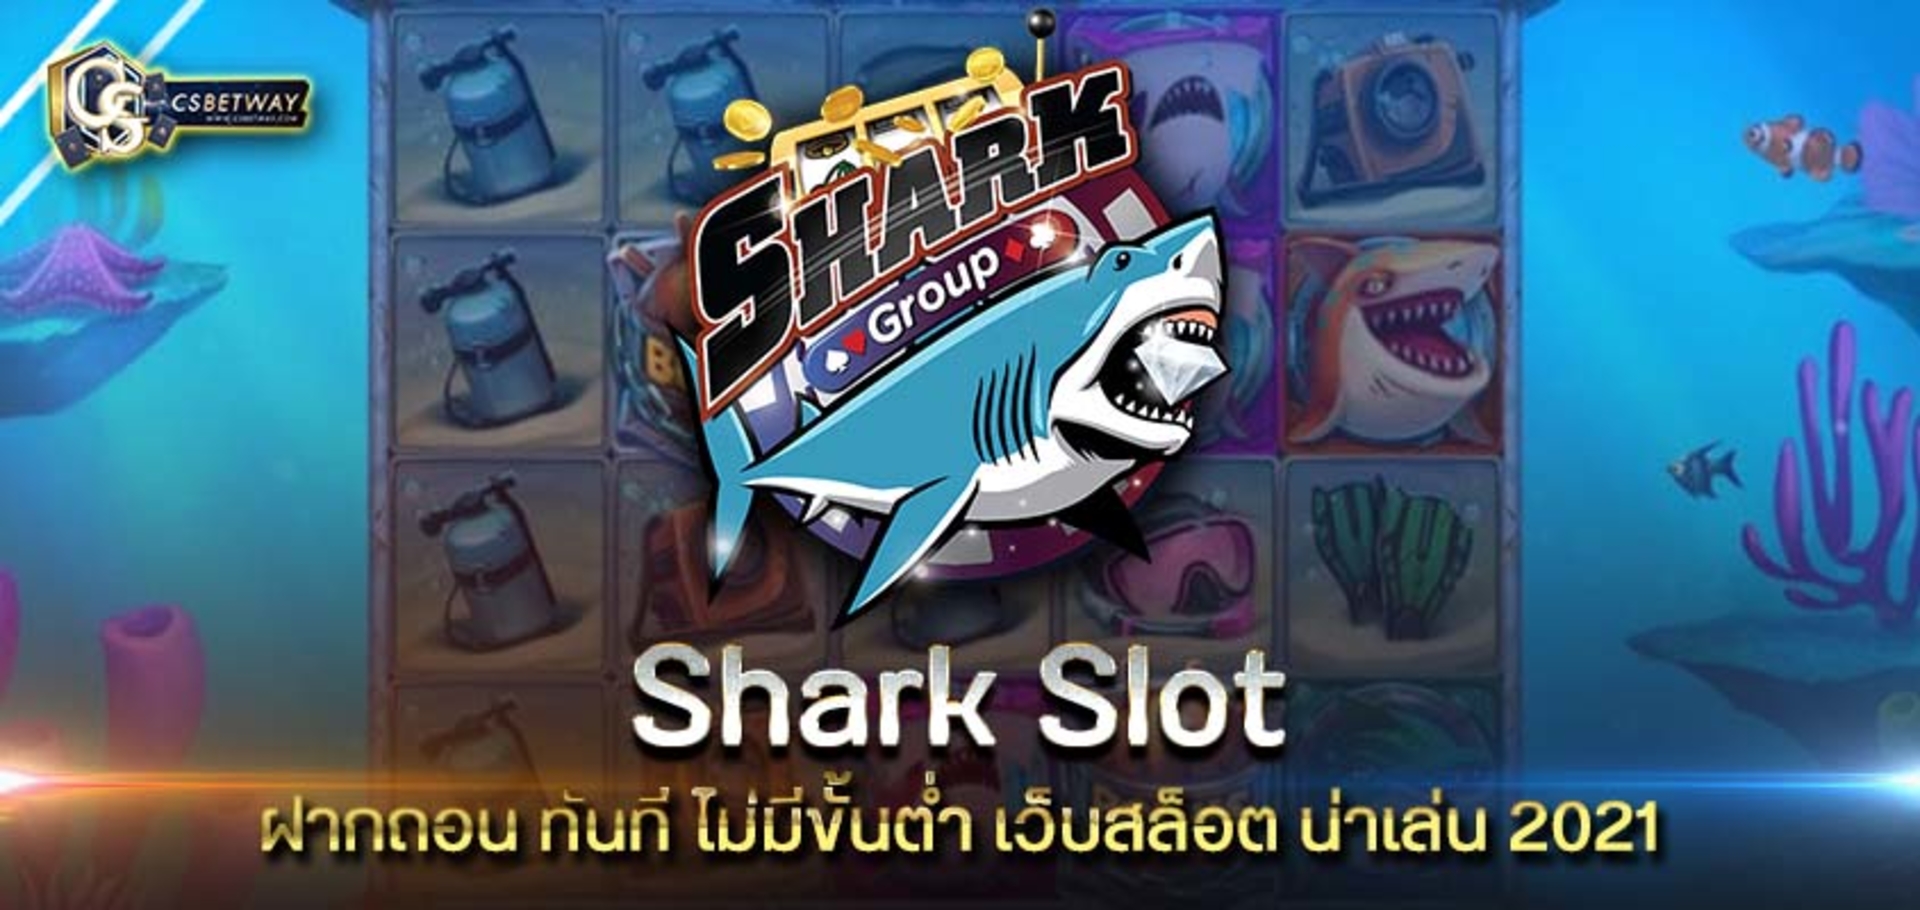 shark slot wallet ฝากถอน ทันที ไม่มีขั้นต่ำ เว็บสล็อต น่าเล่น 2021